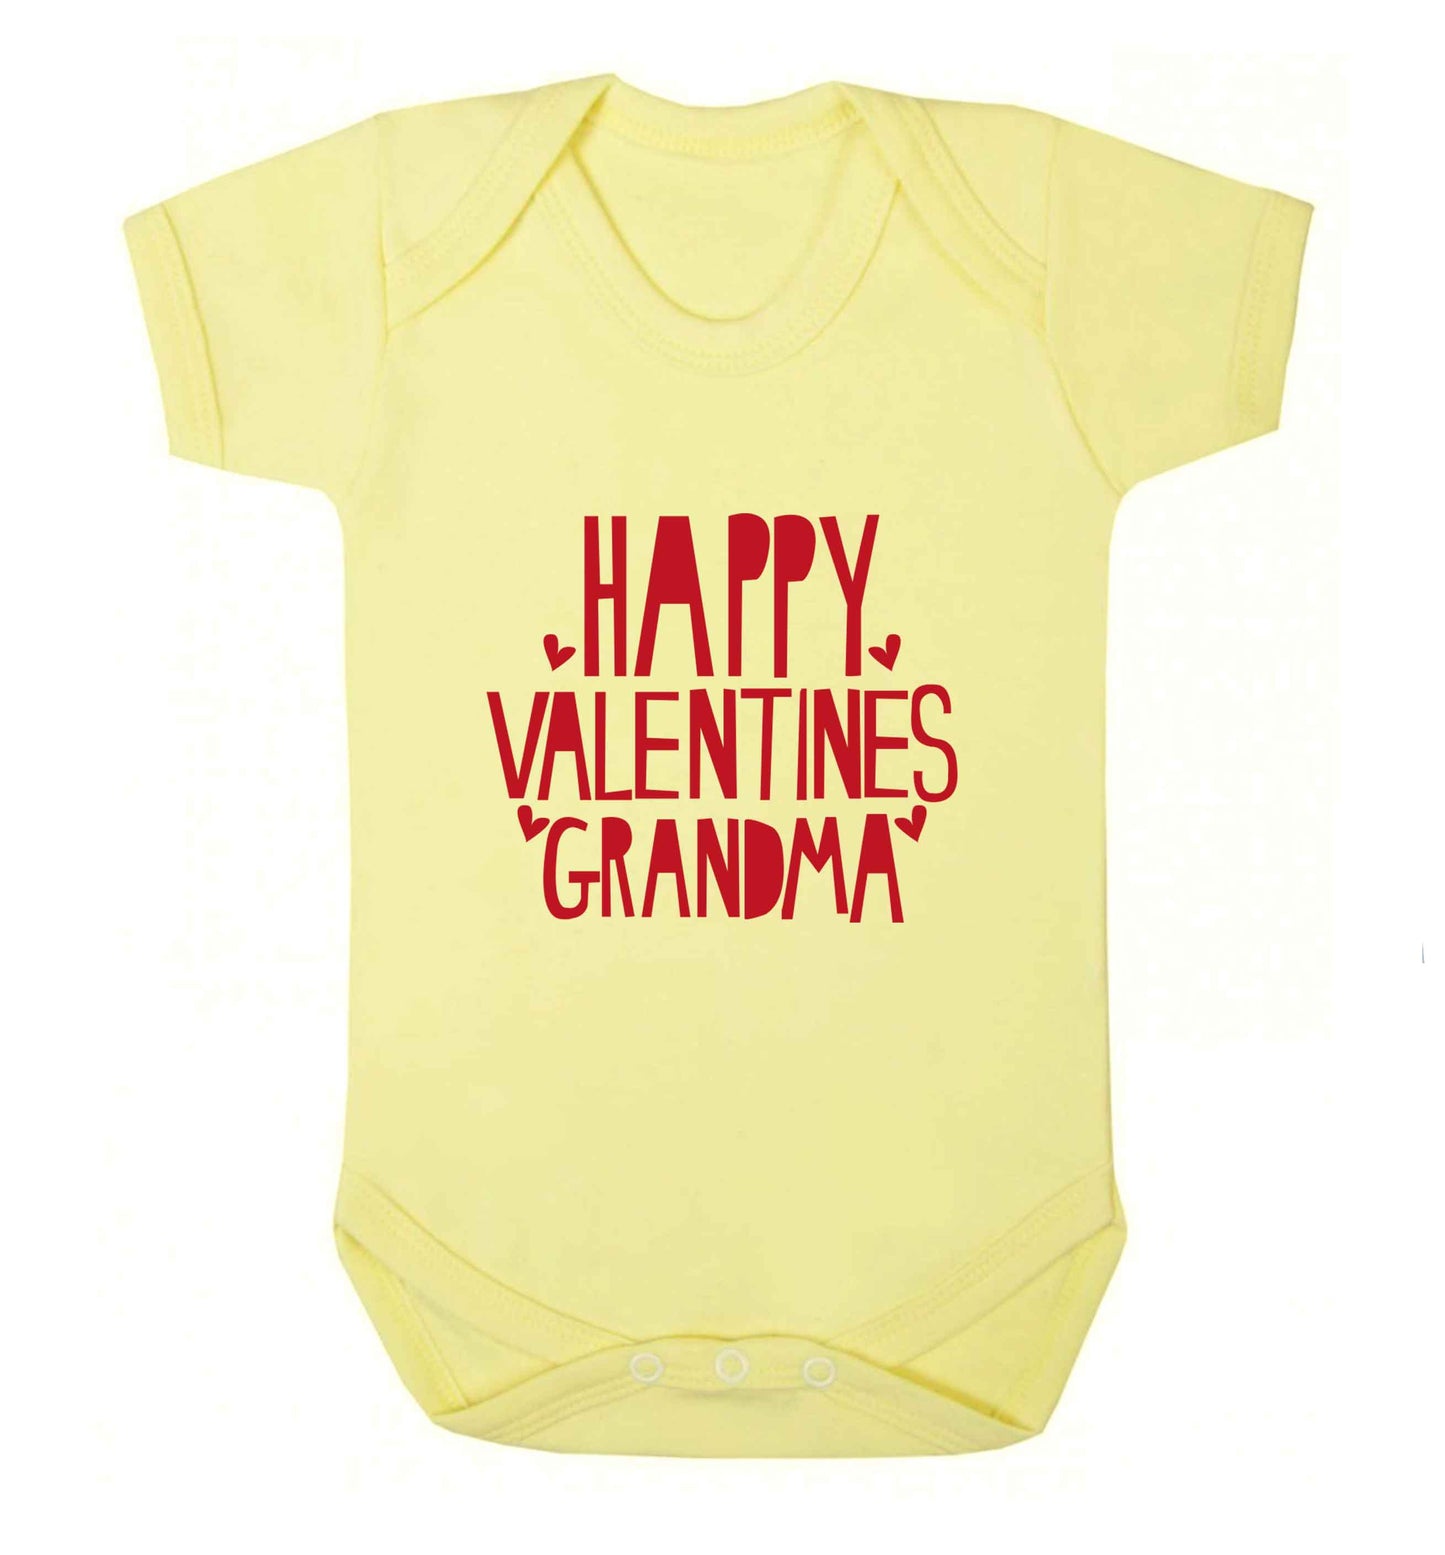 Happy valentines grandma baby vest pale yellow 18-24 months